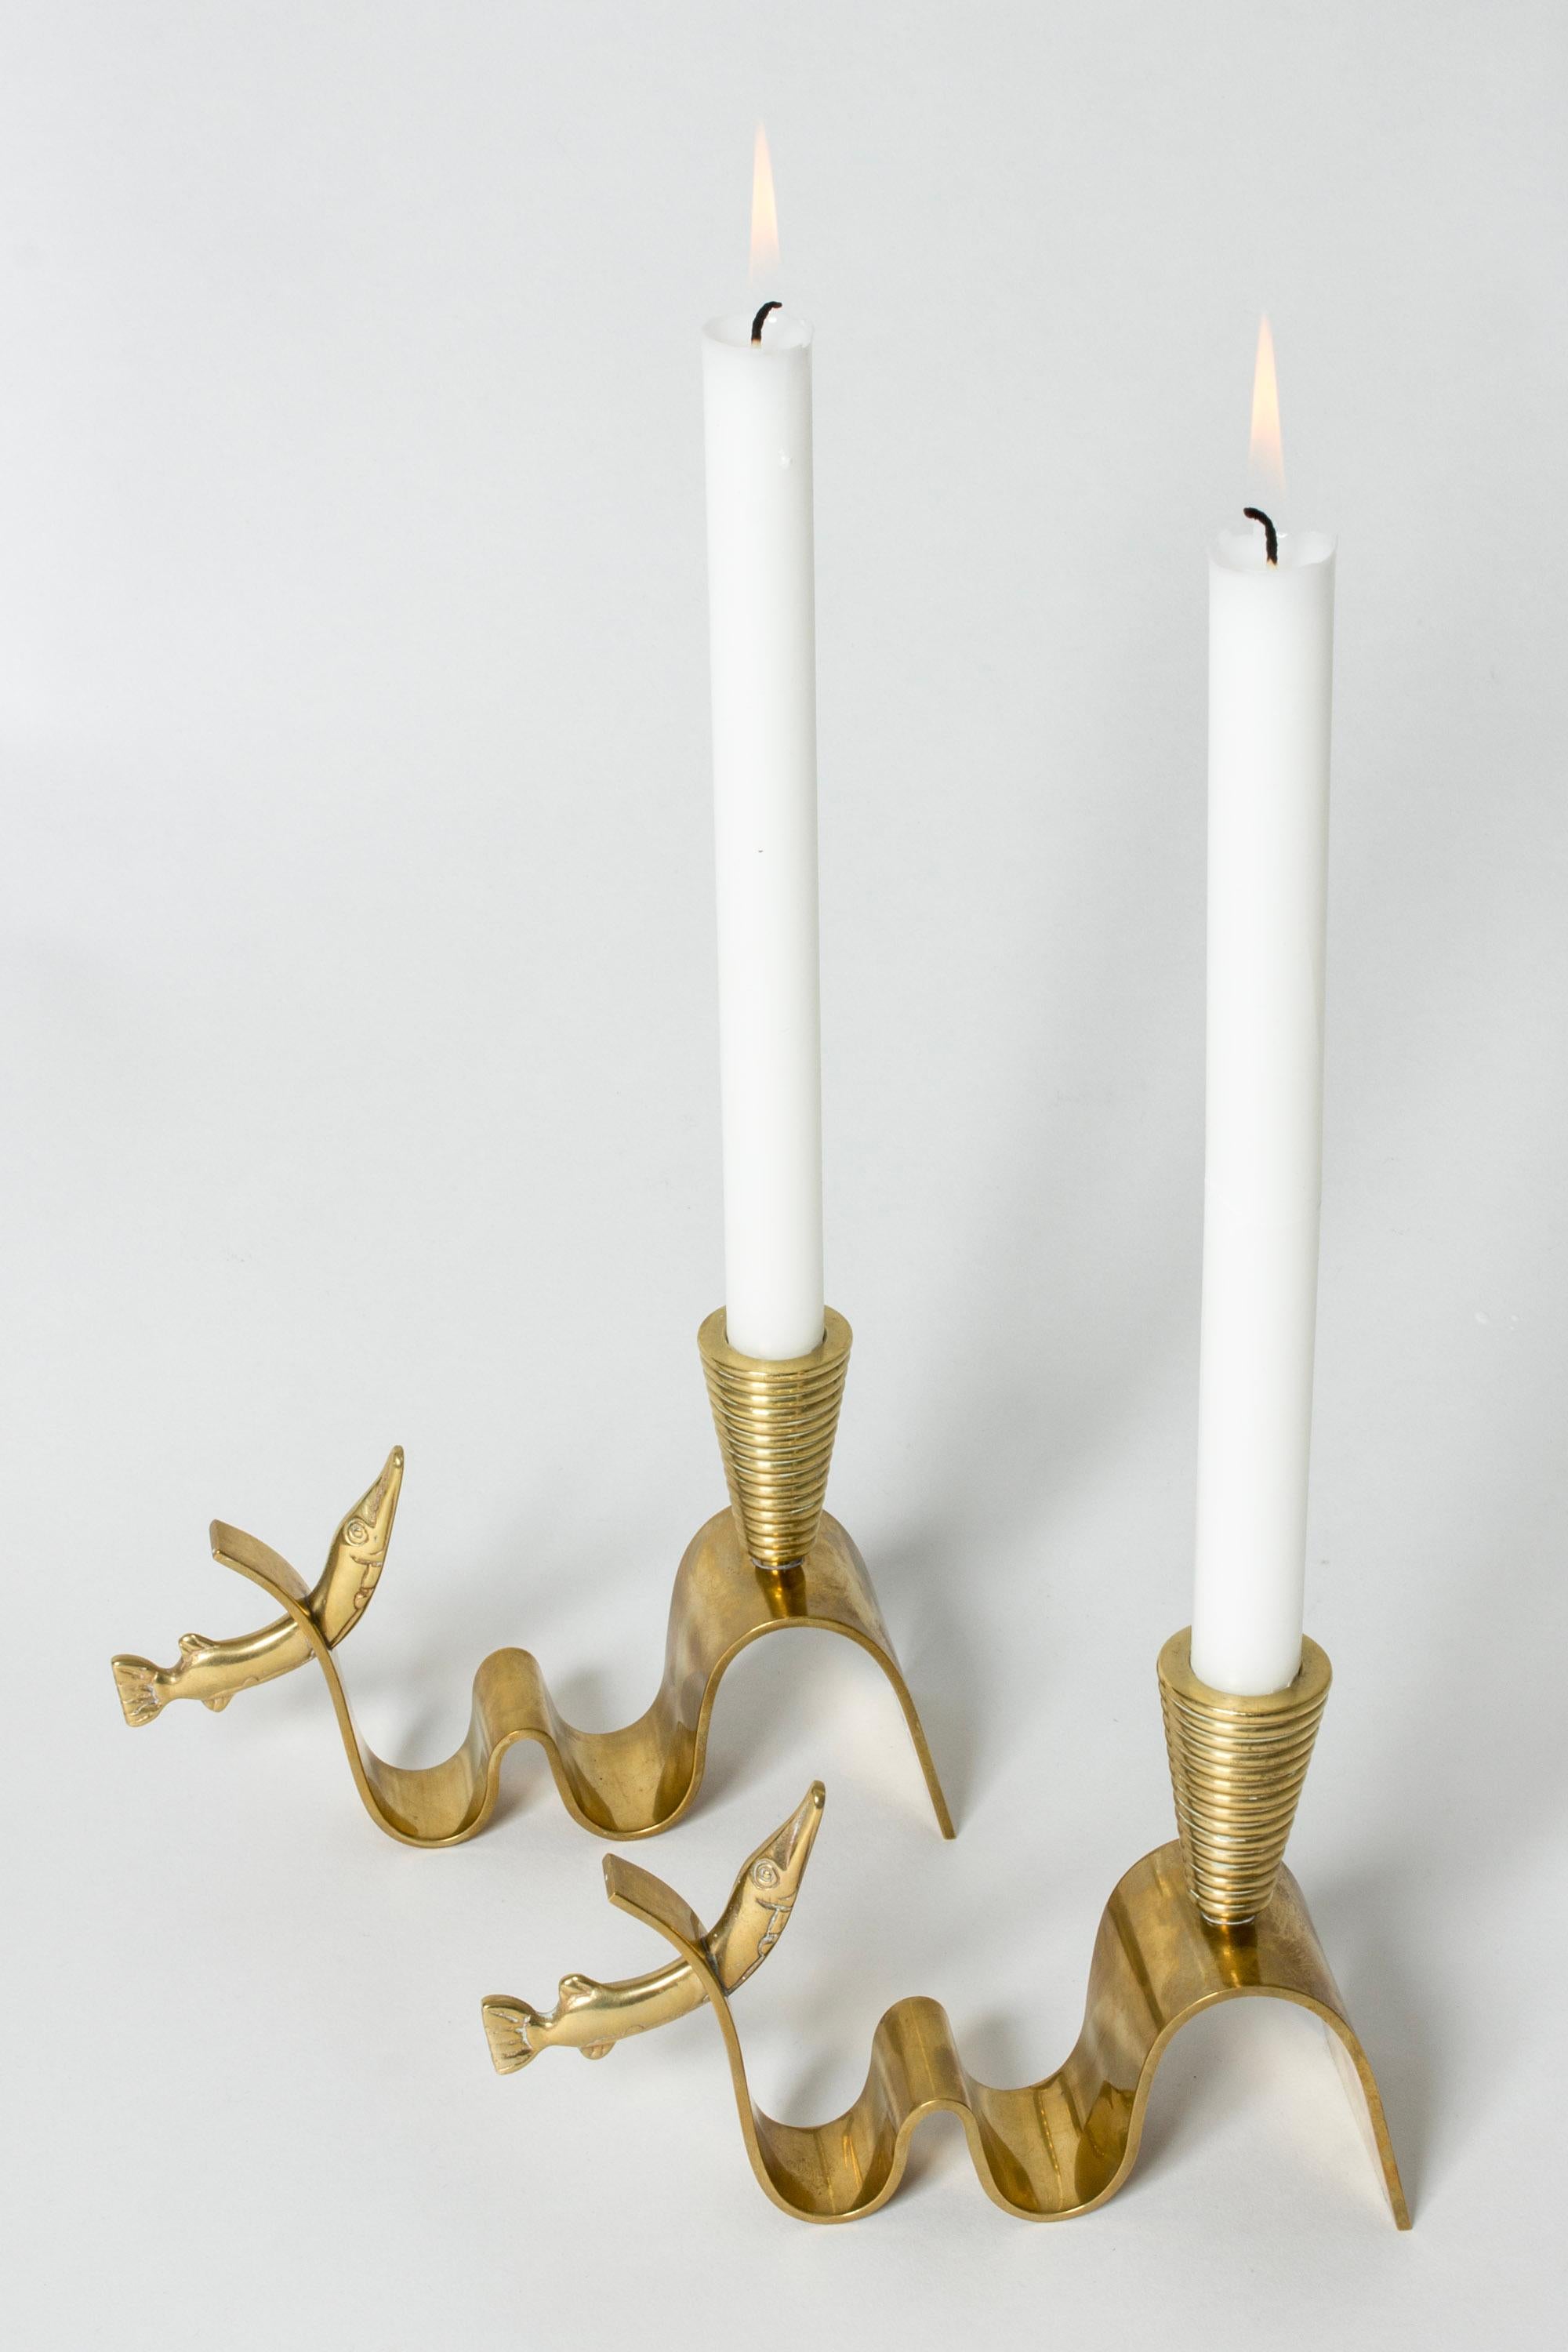 Scandinavian Modern Vintage Brass Candlesticks by Carl-Einar Borgström, Ystad Metall, Sweden, 1940s For Sale